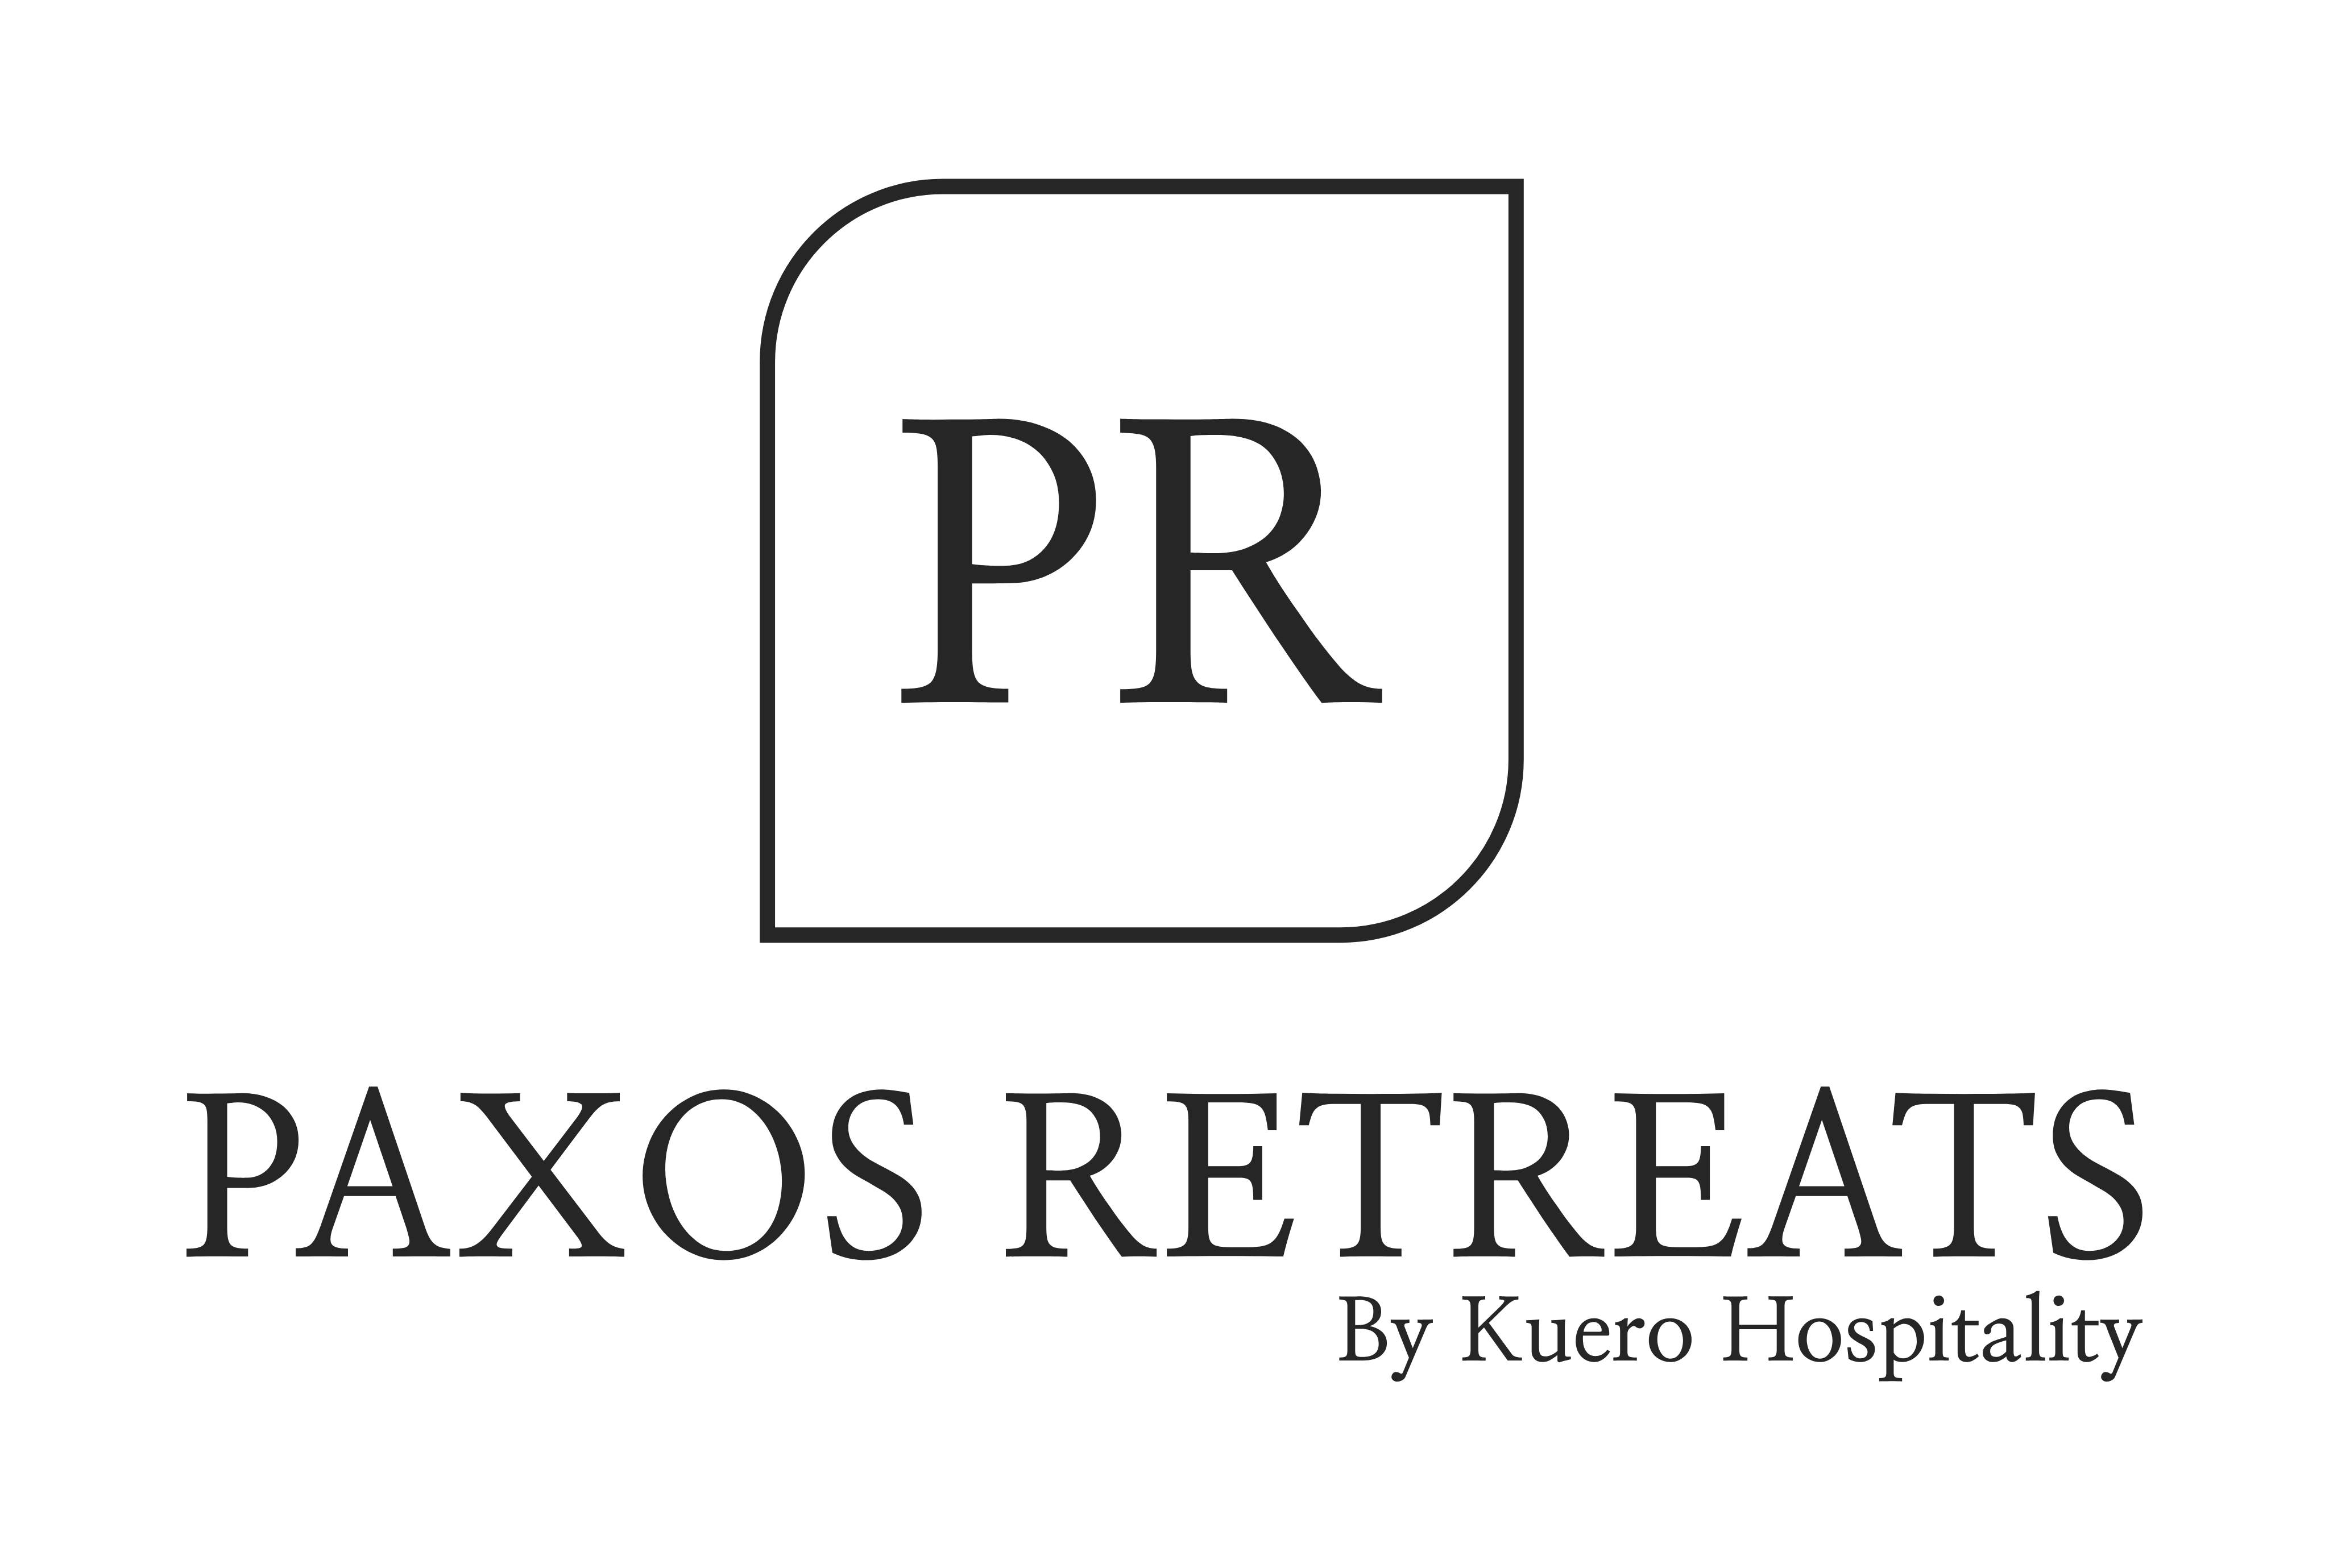 Paxos Retreats